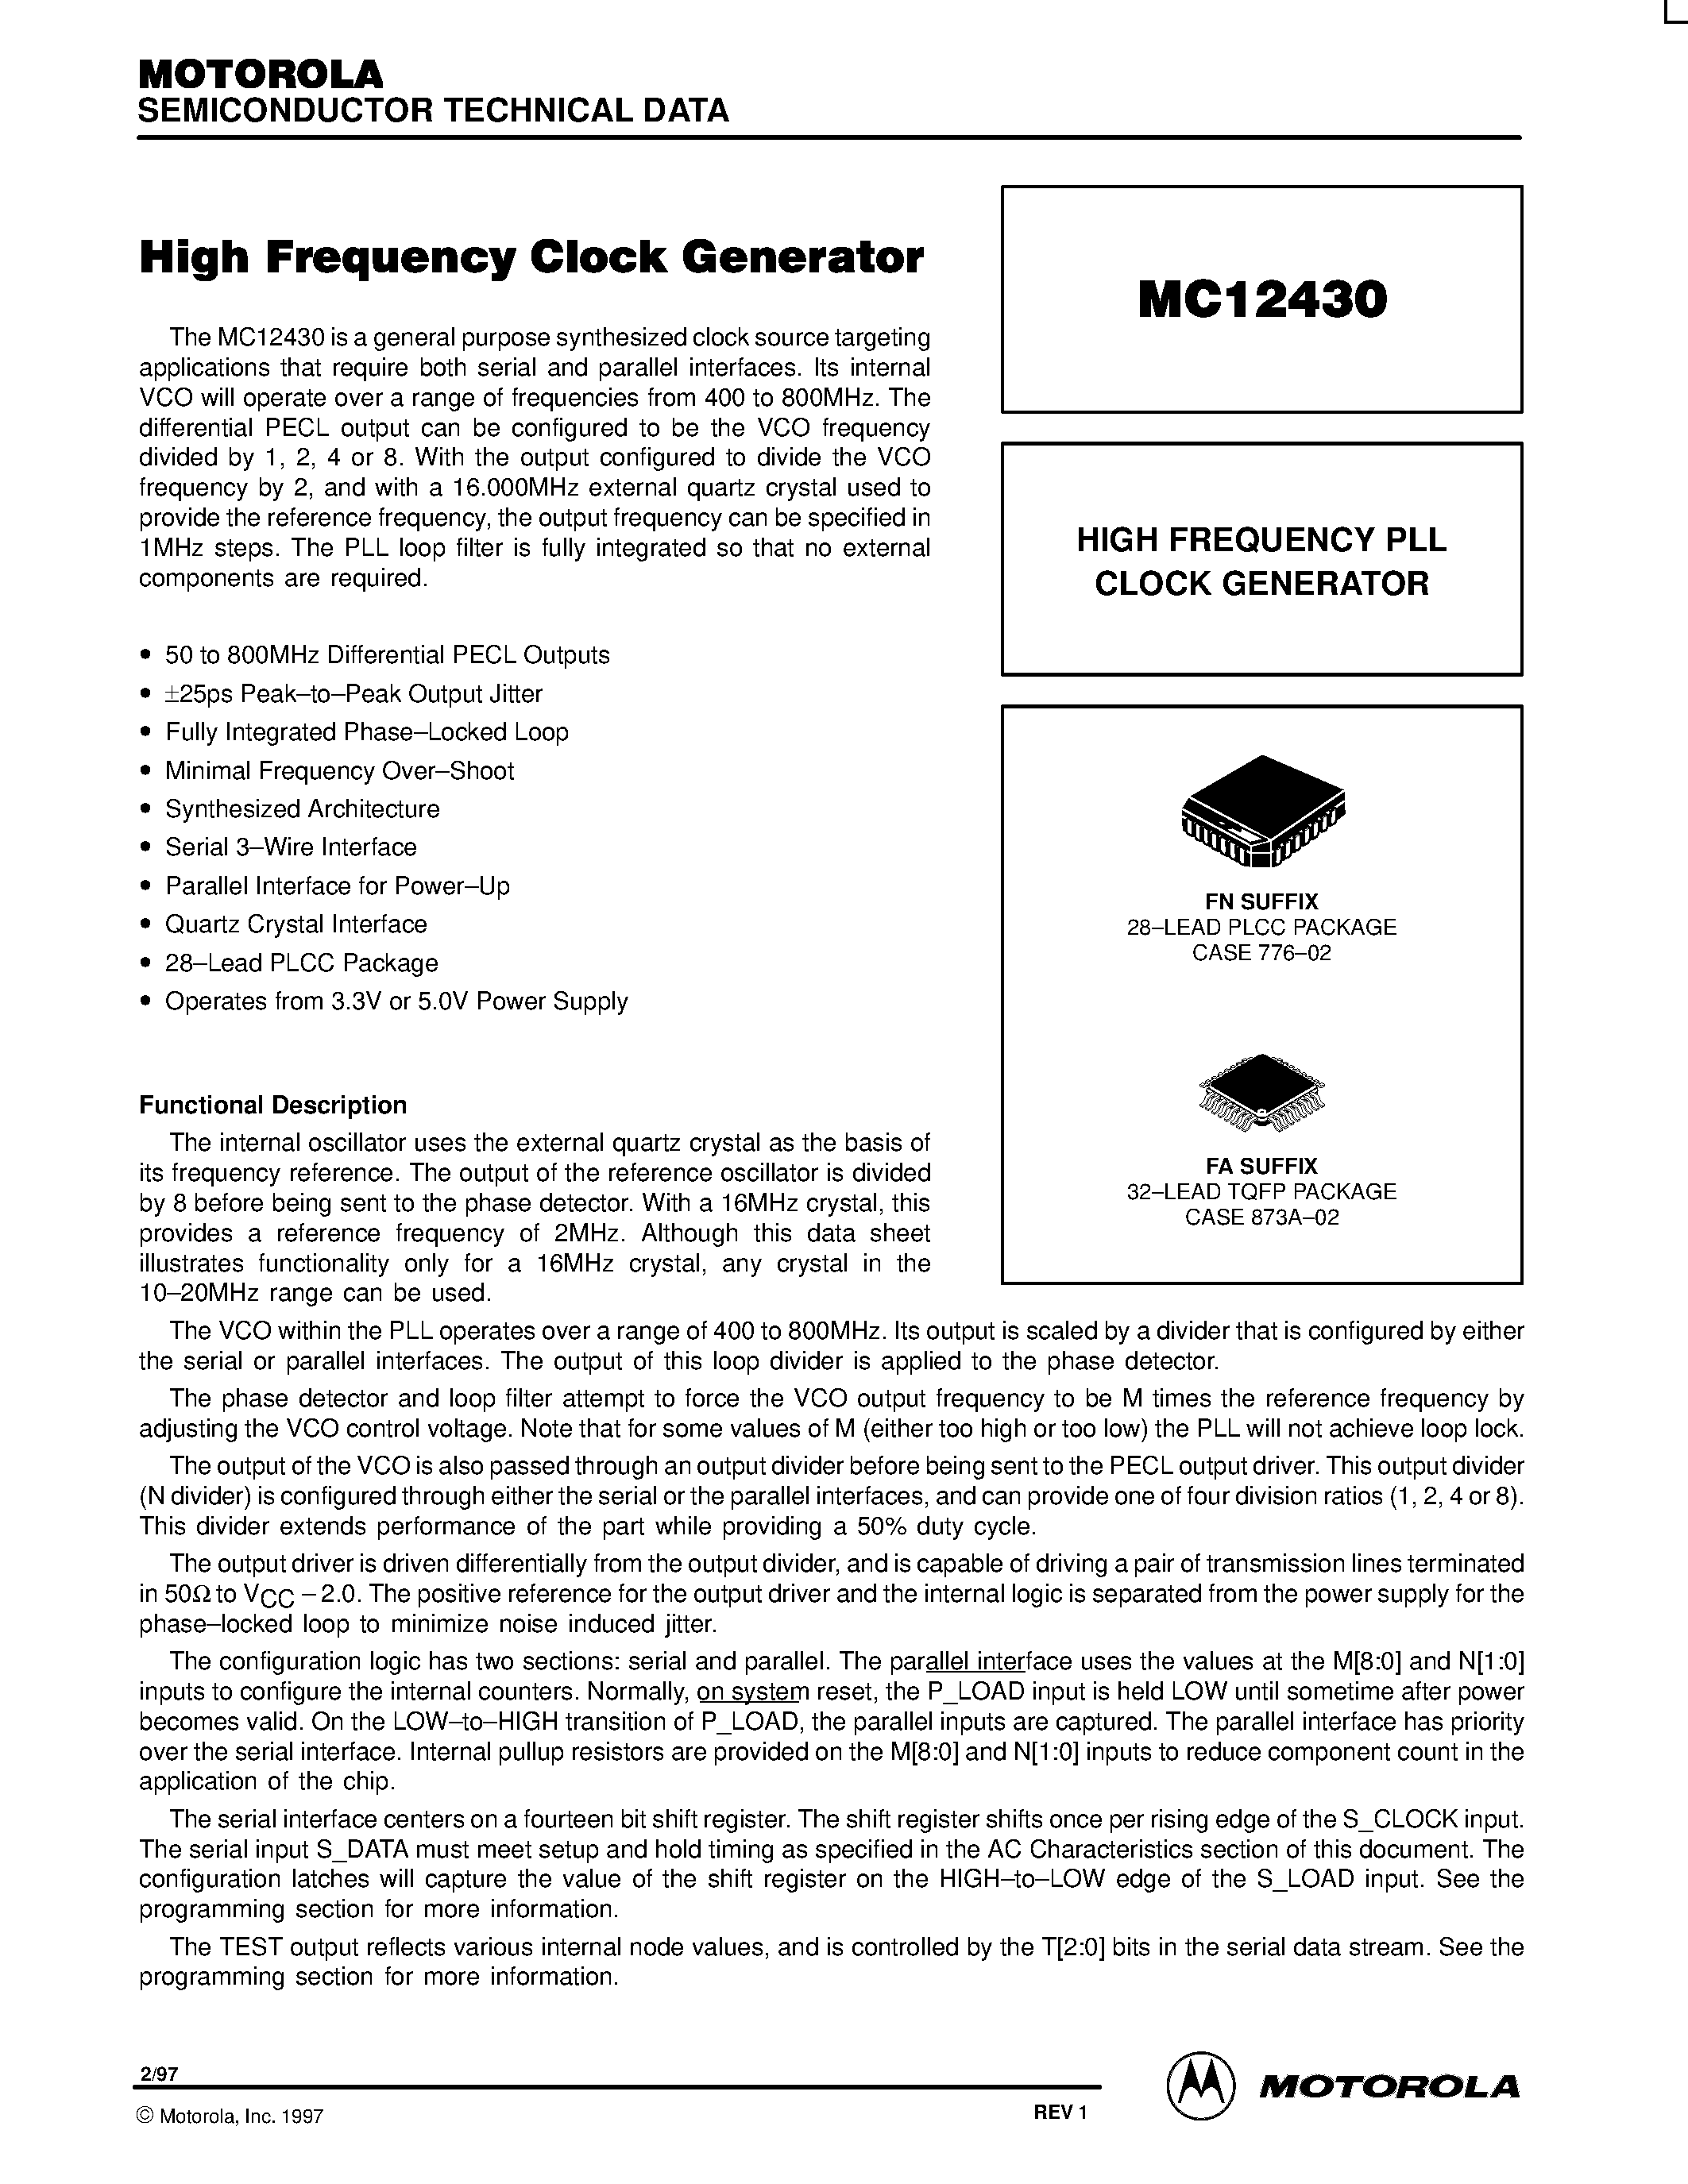 Datasheet MC12430FN - HIGH FREQUENCY PLL CLOCK GENERATOR page 1